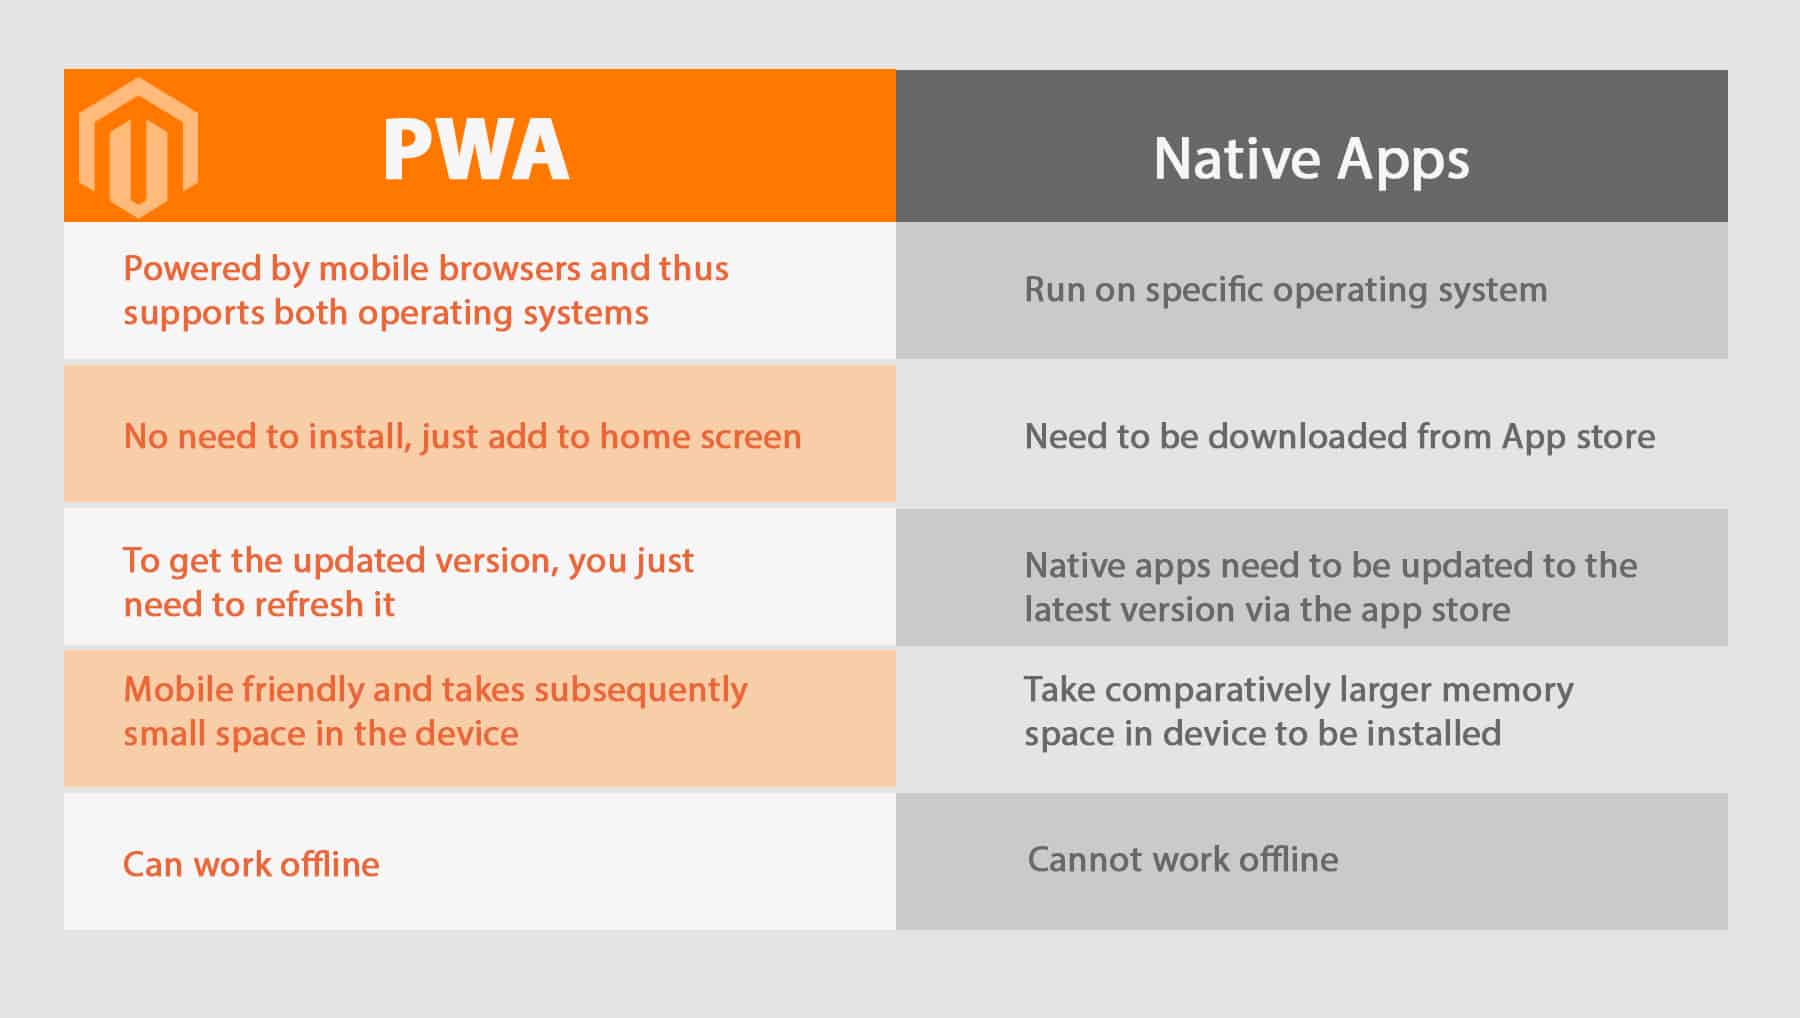 Comparison of PWA with Native Mobile Apps